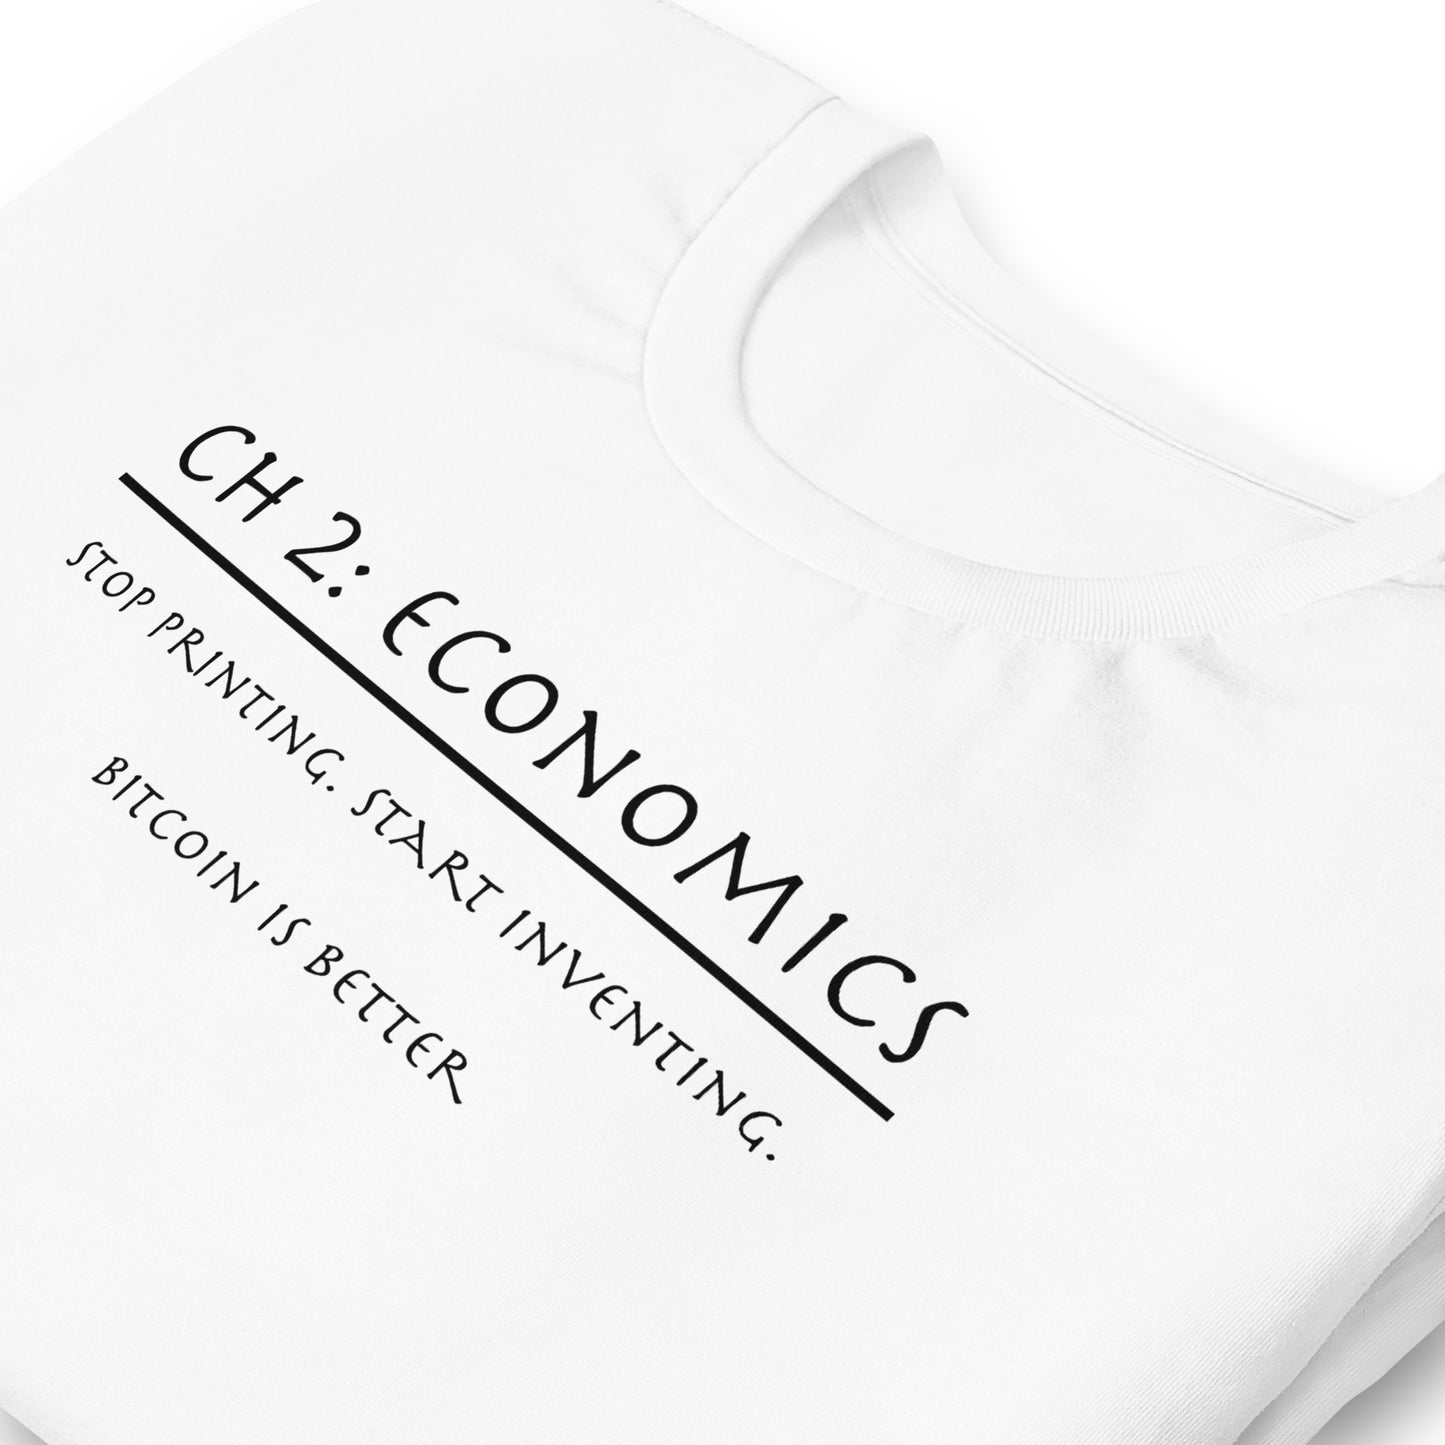 Chapter 2: Economics T-Shirt